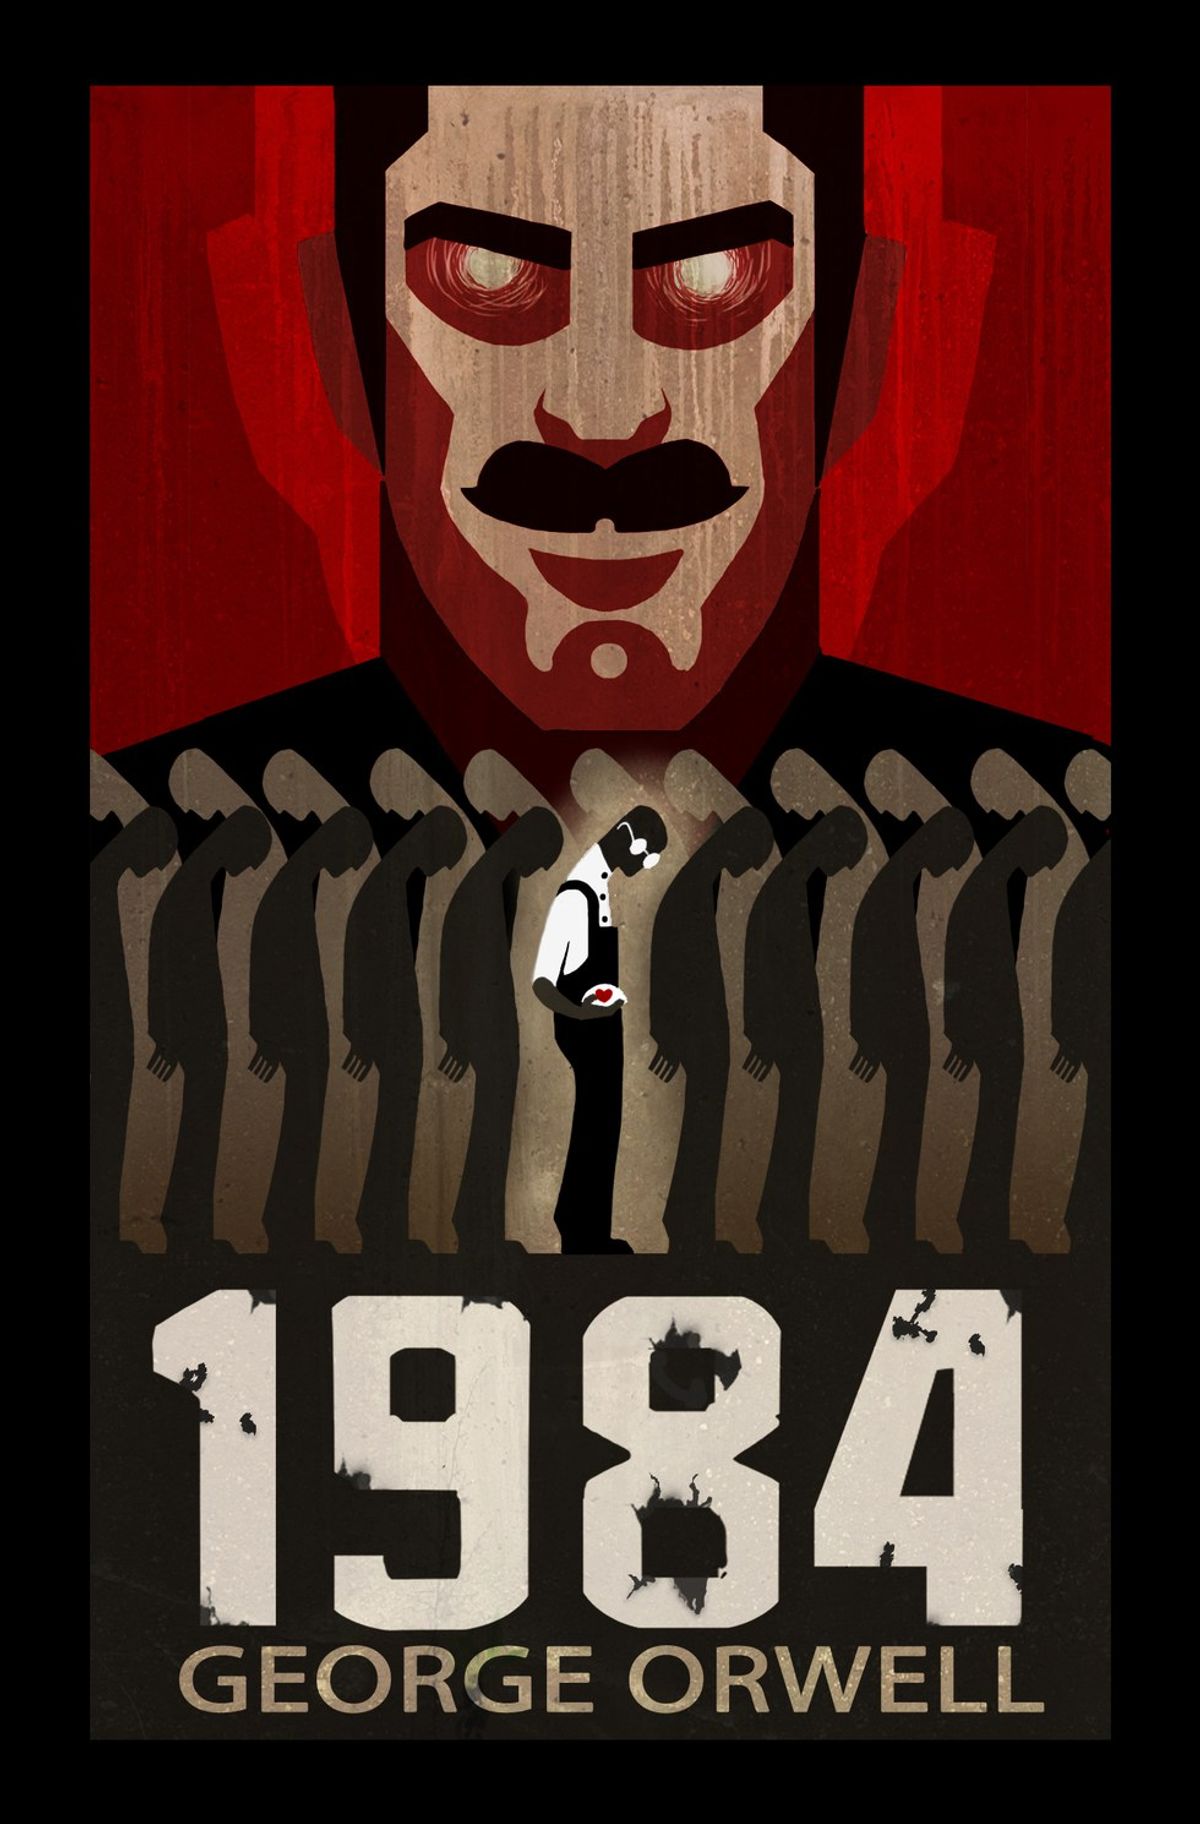 Why George Orwell Wrote "1984"